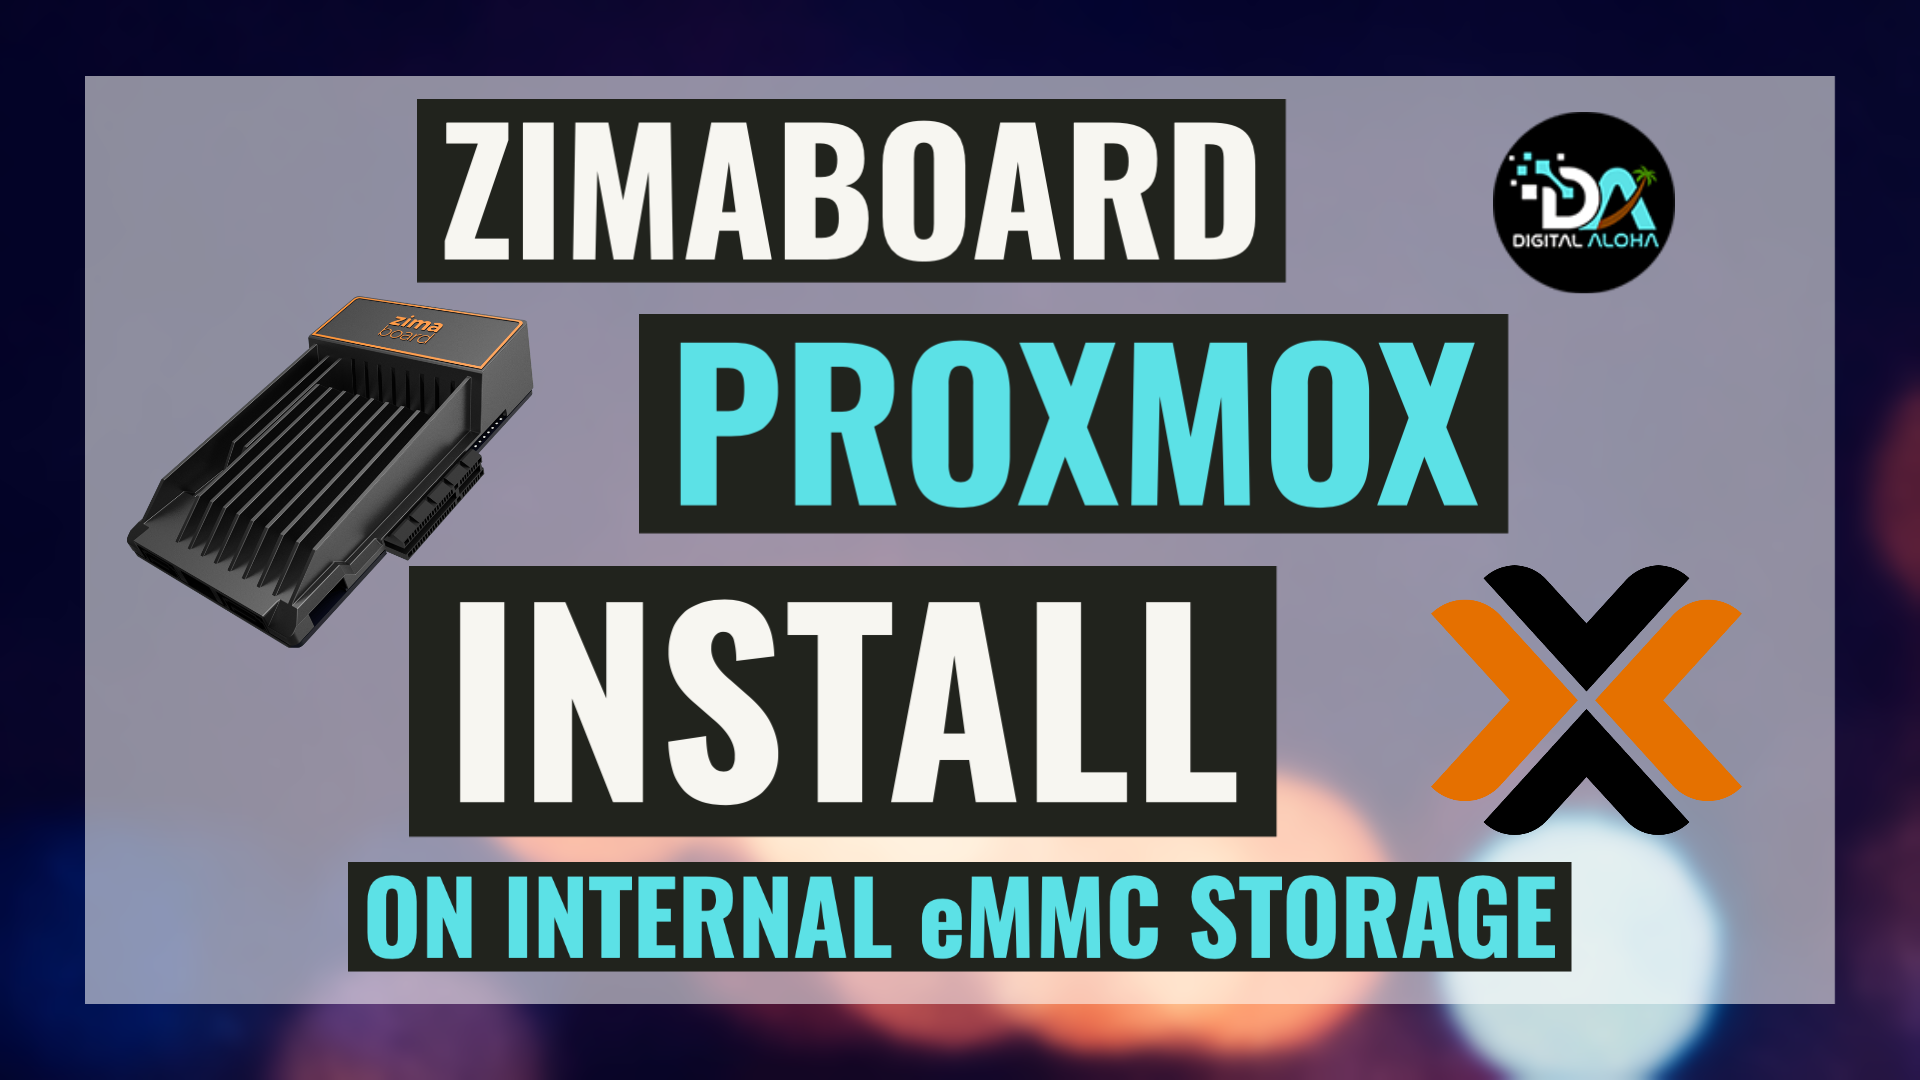 Install Proxmox On A Zimaboard On Its Internal eMMC Storage